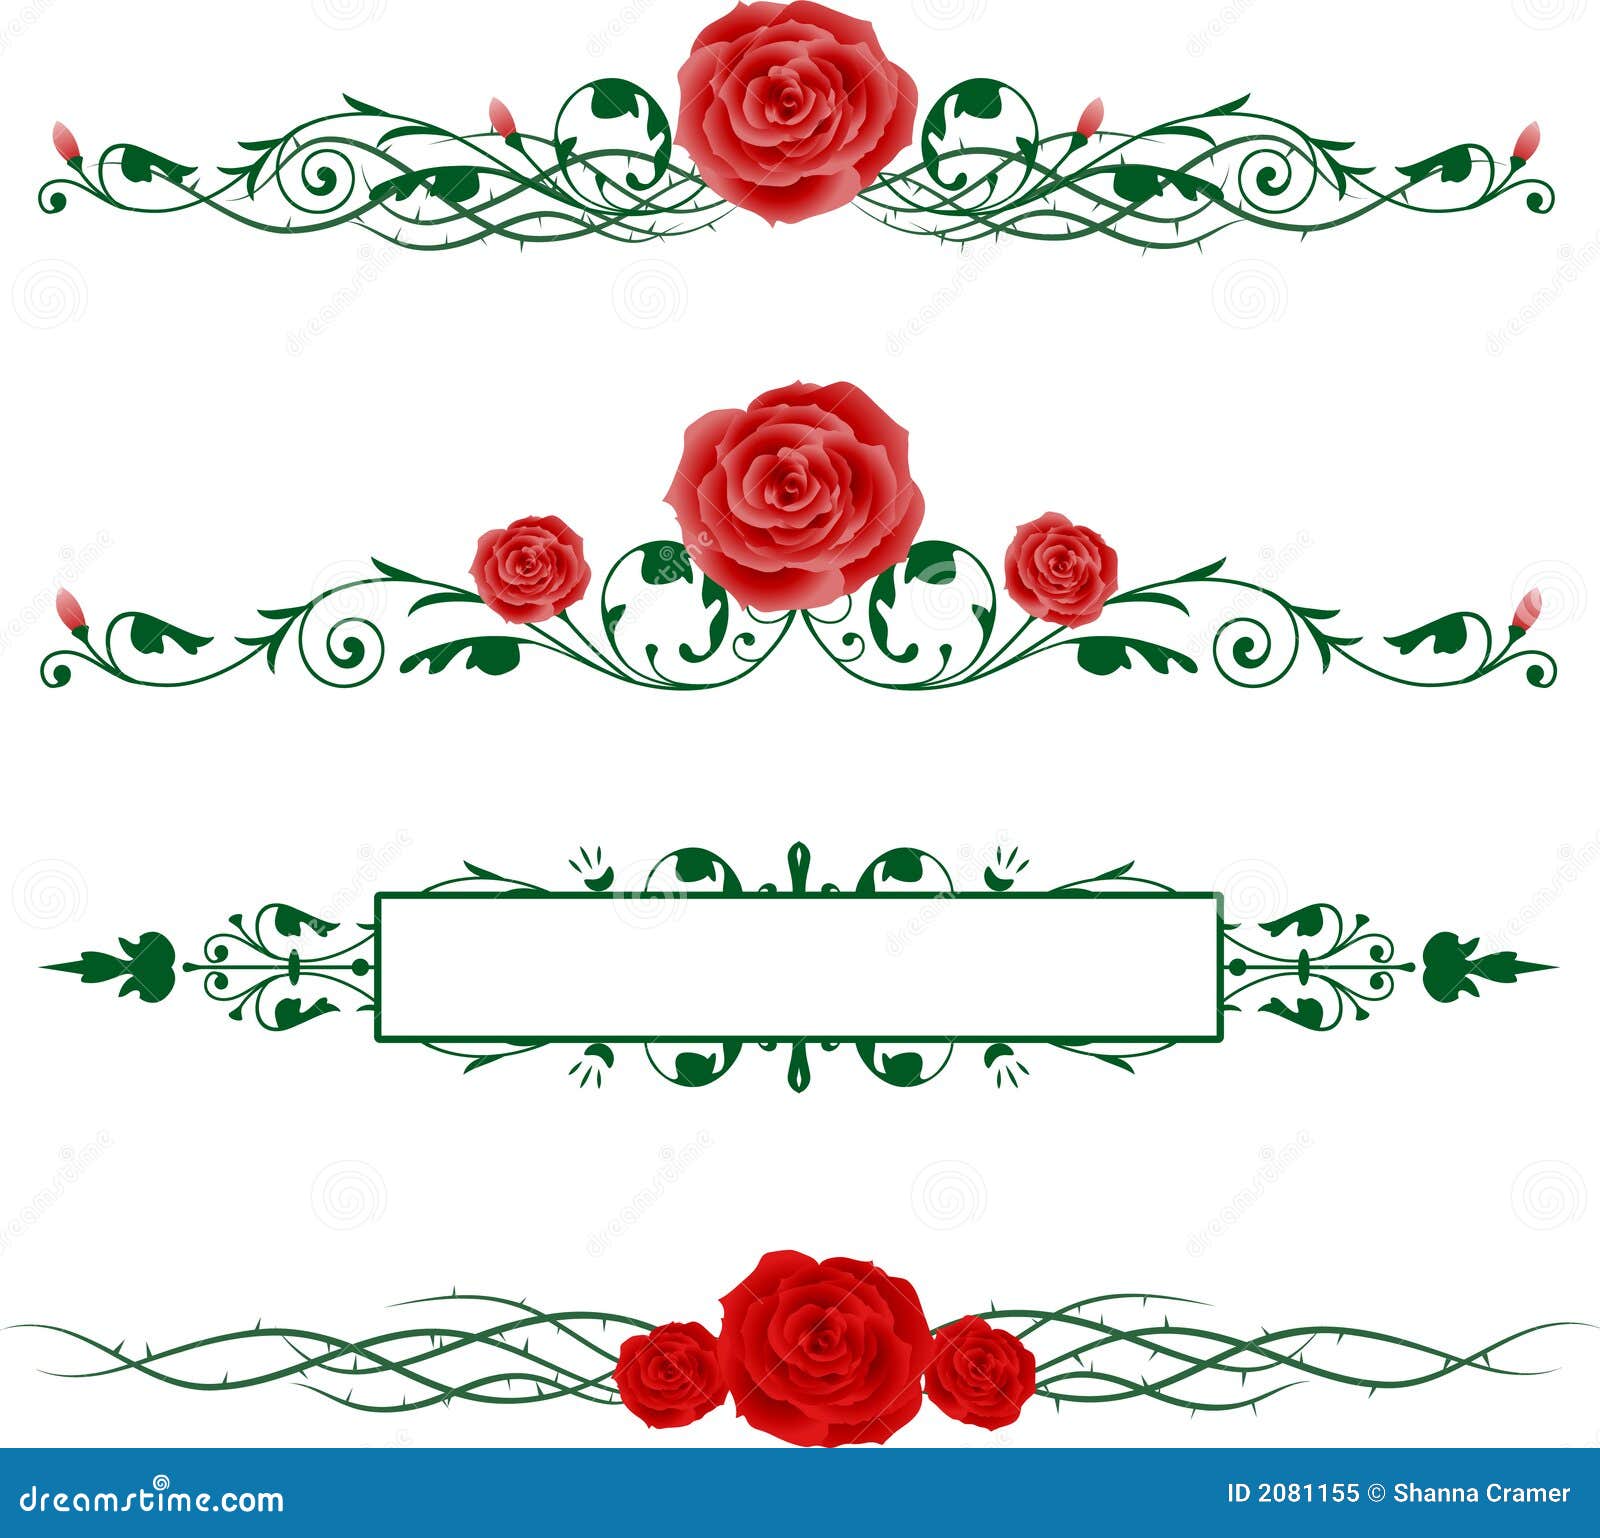 clipart rose rosse - photo #19